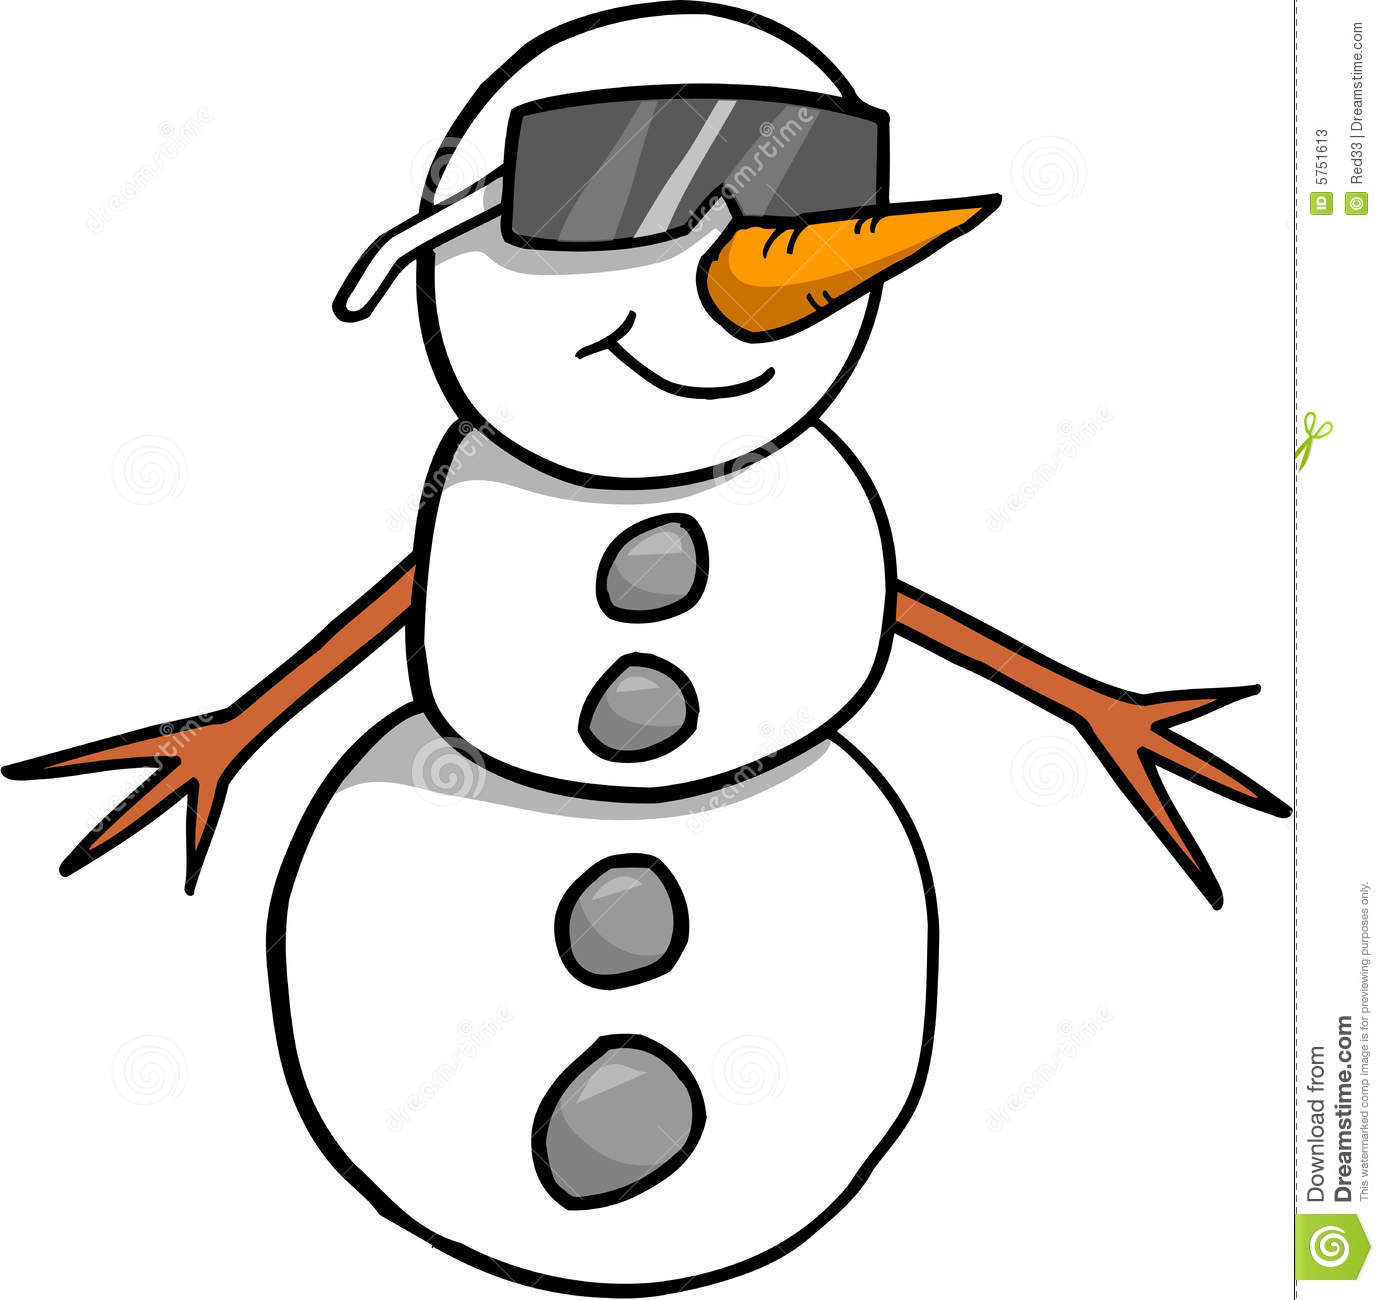 Snowman Vector Illustration Stock Photos   Image  5751613